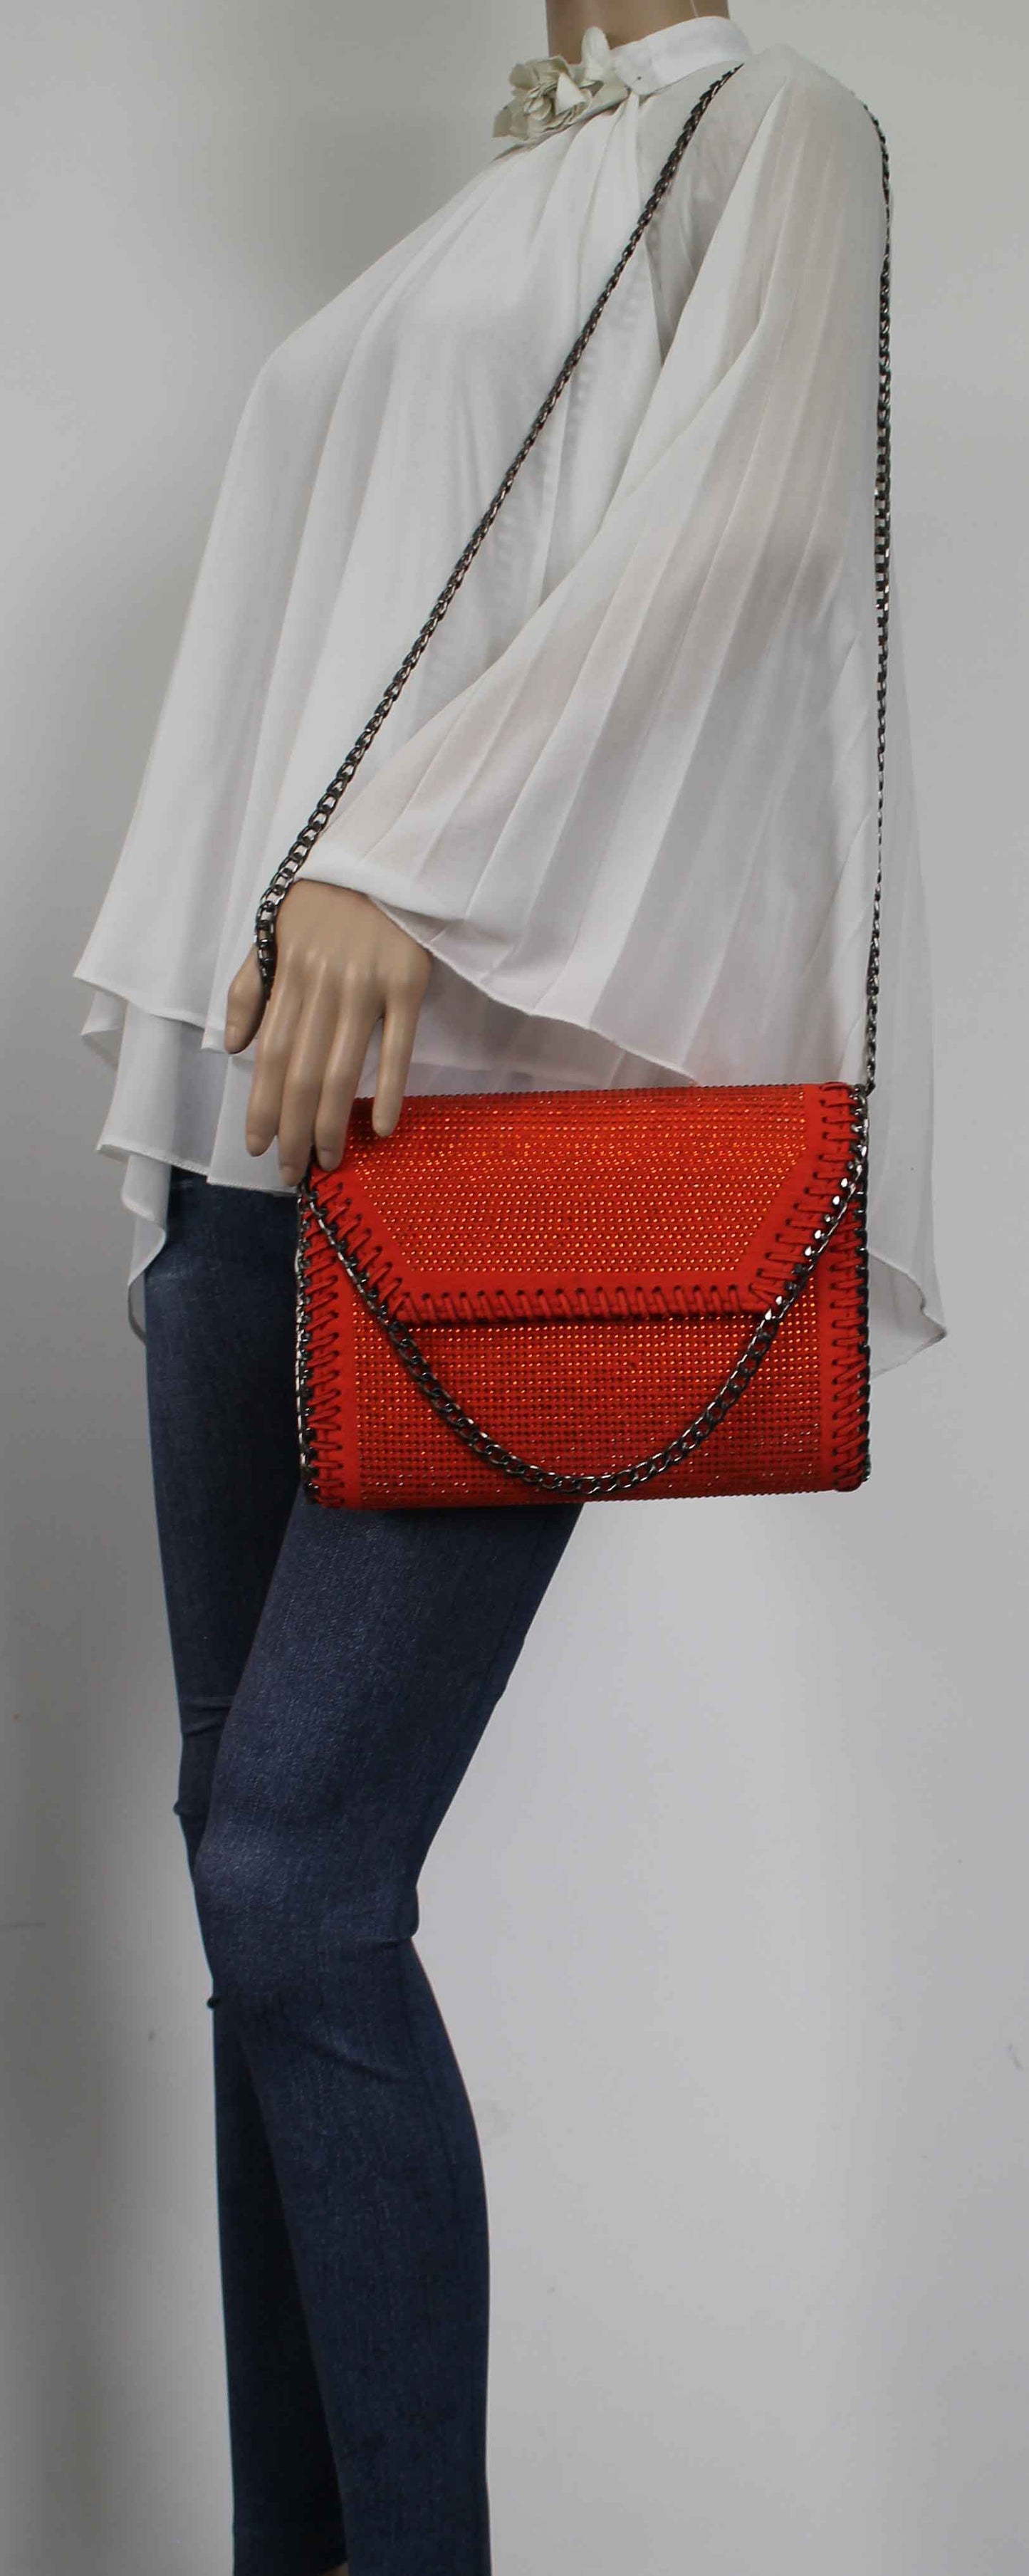 SWANKYSWANS Soi Diamante Clutch Bag Scarlet Cute Cheap Clutch Bag For Weddings School and Work